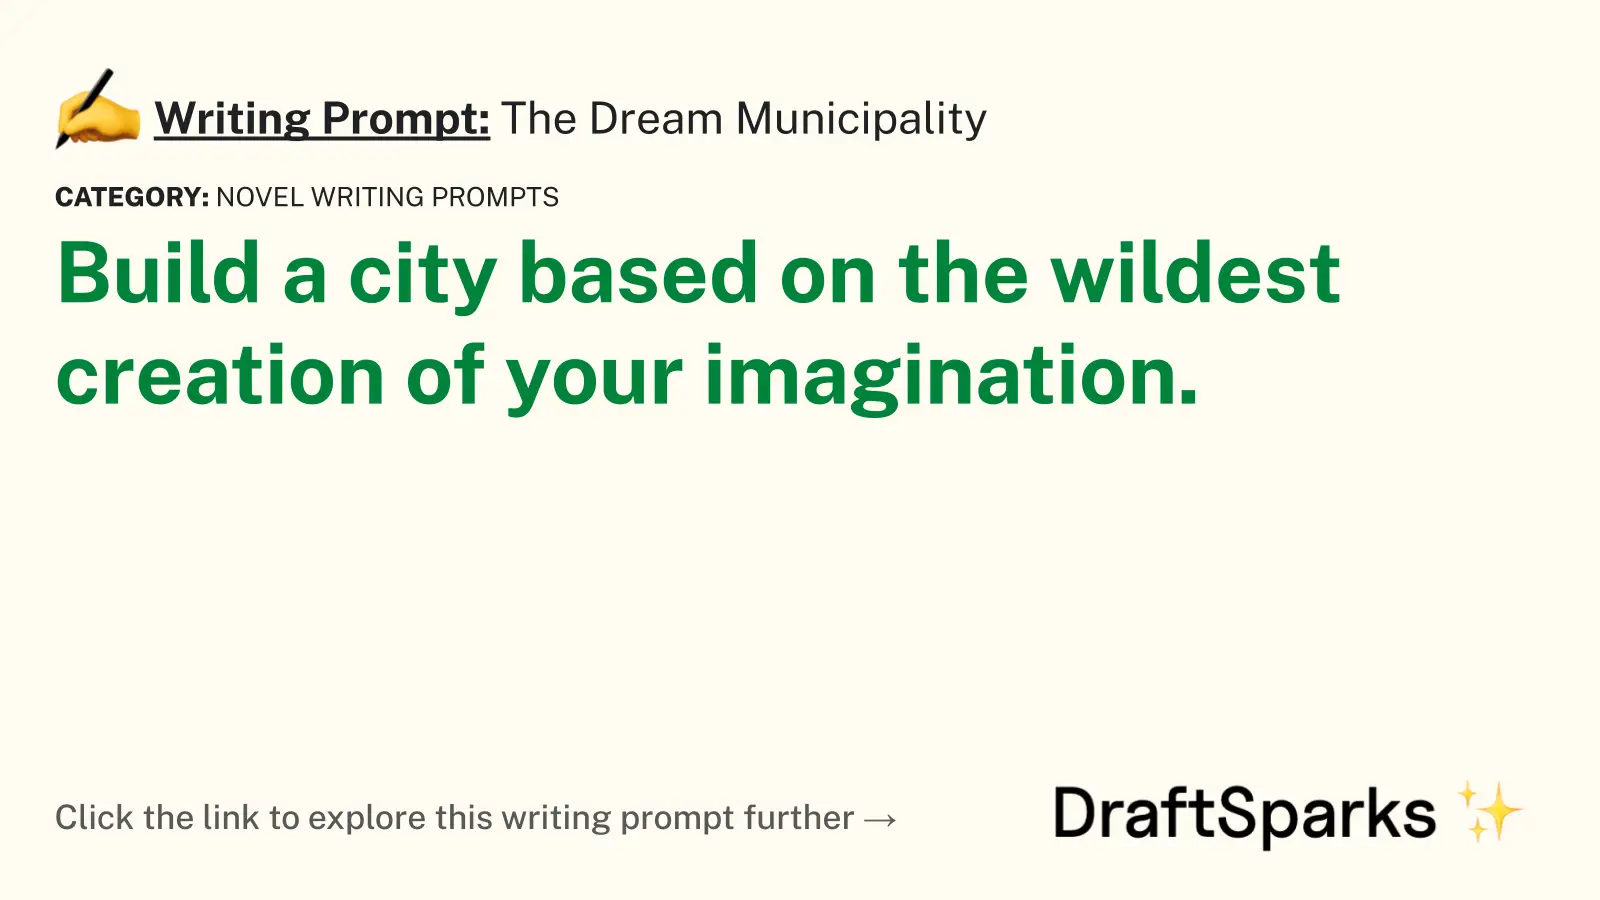 The Dream Municipality